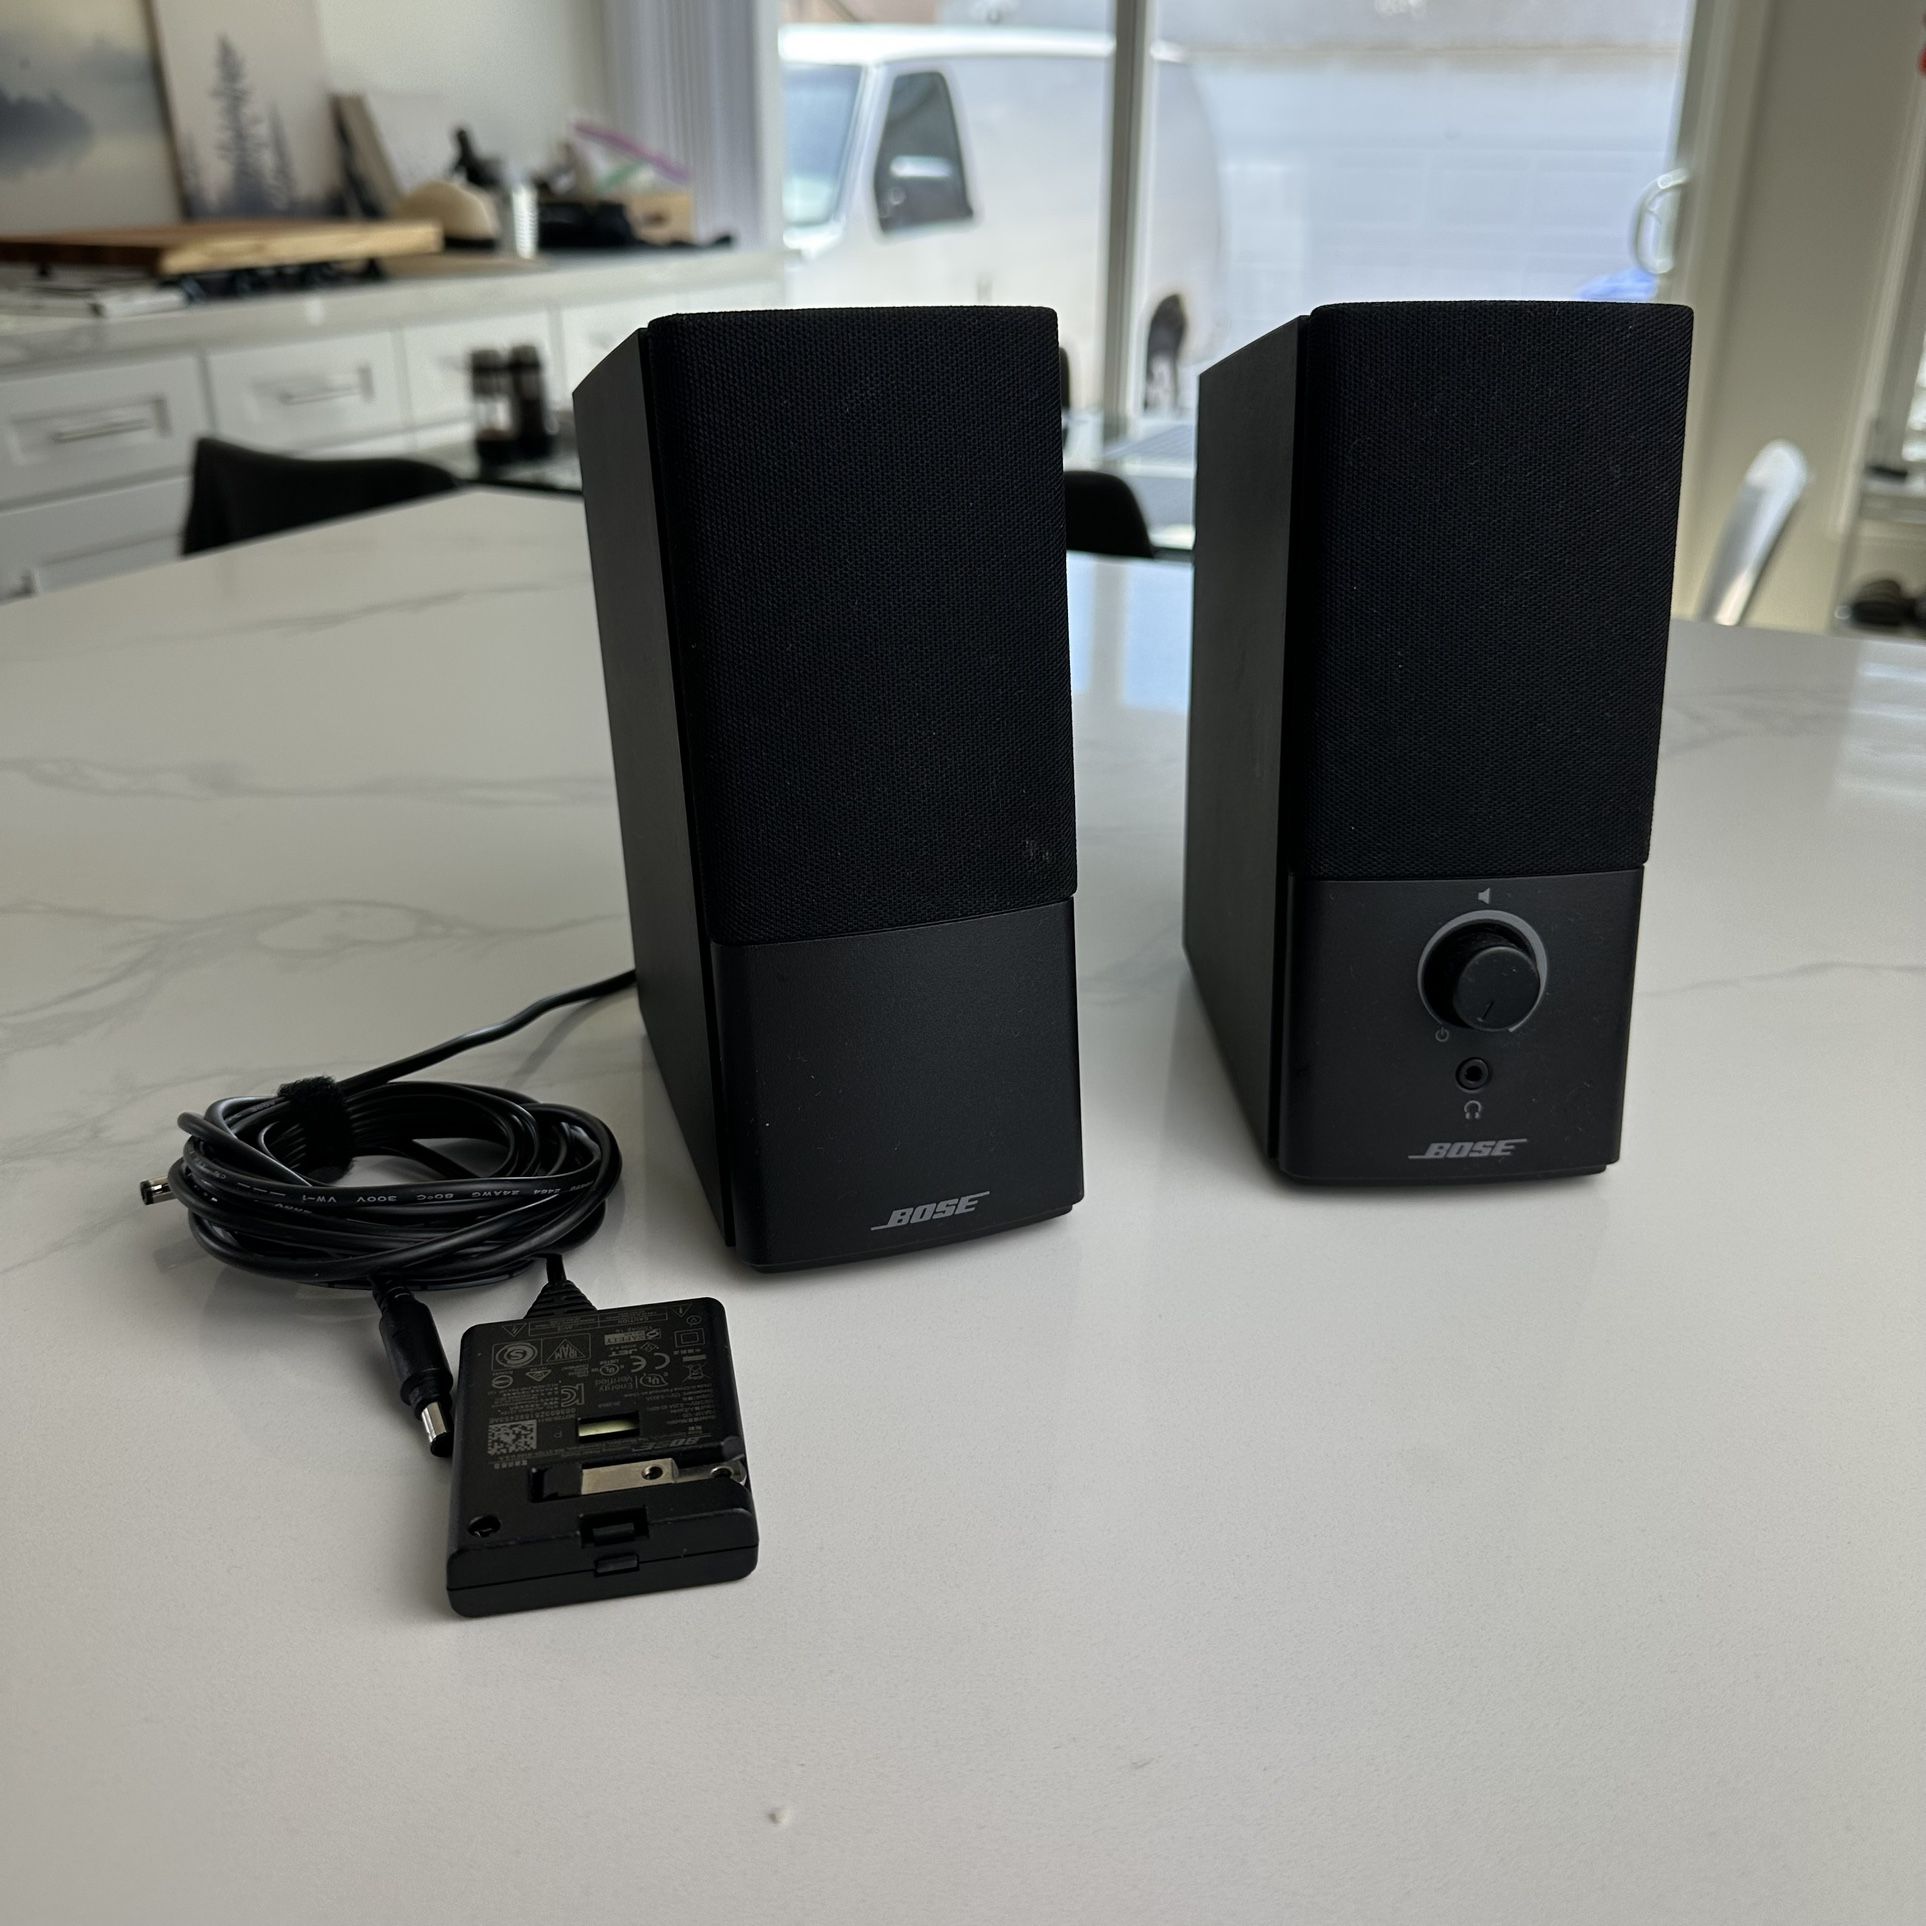 Bose Companion 2 Series III Speakers for Sale in Gardena, CA - OfferUp